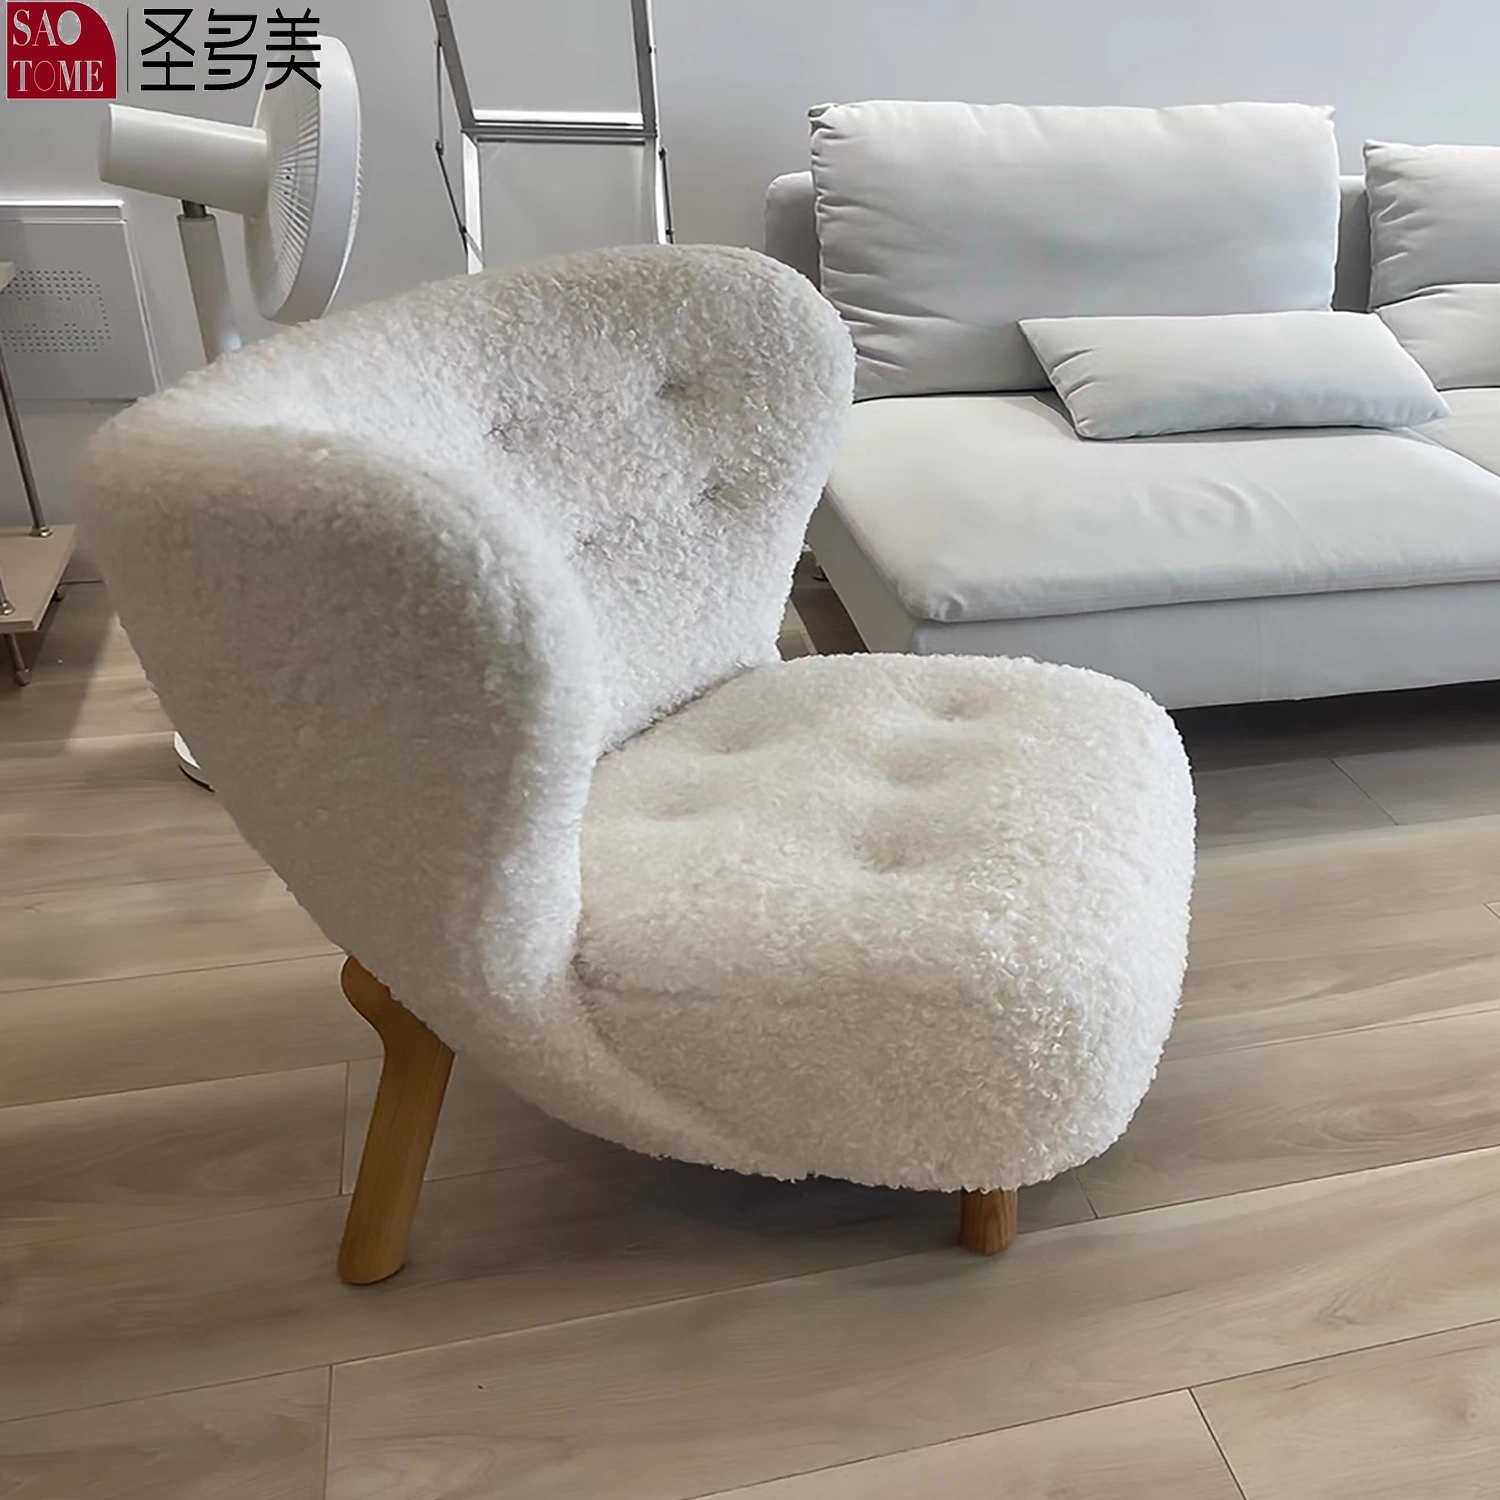 622 de la vida moderna habitación silla Sillón Silla de ocio de tela blanca